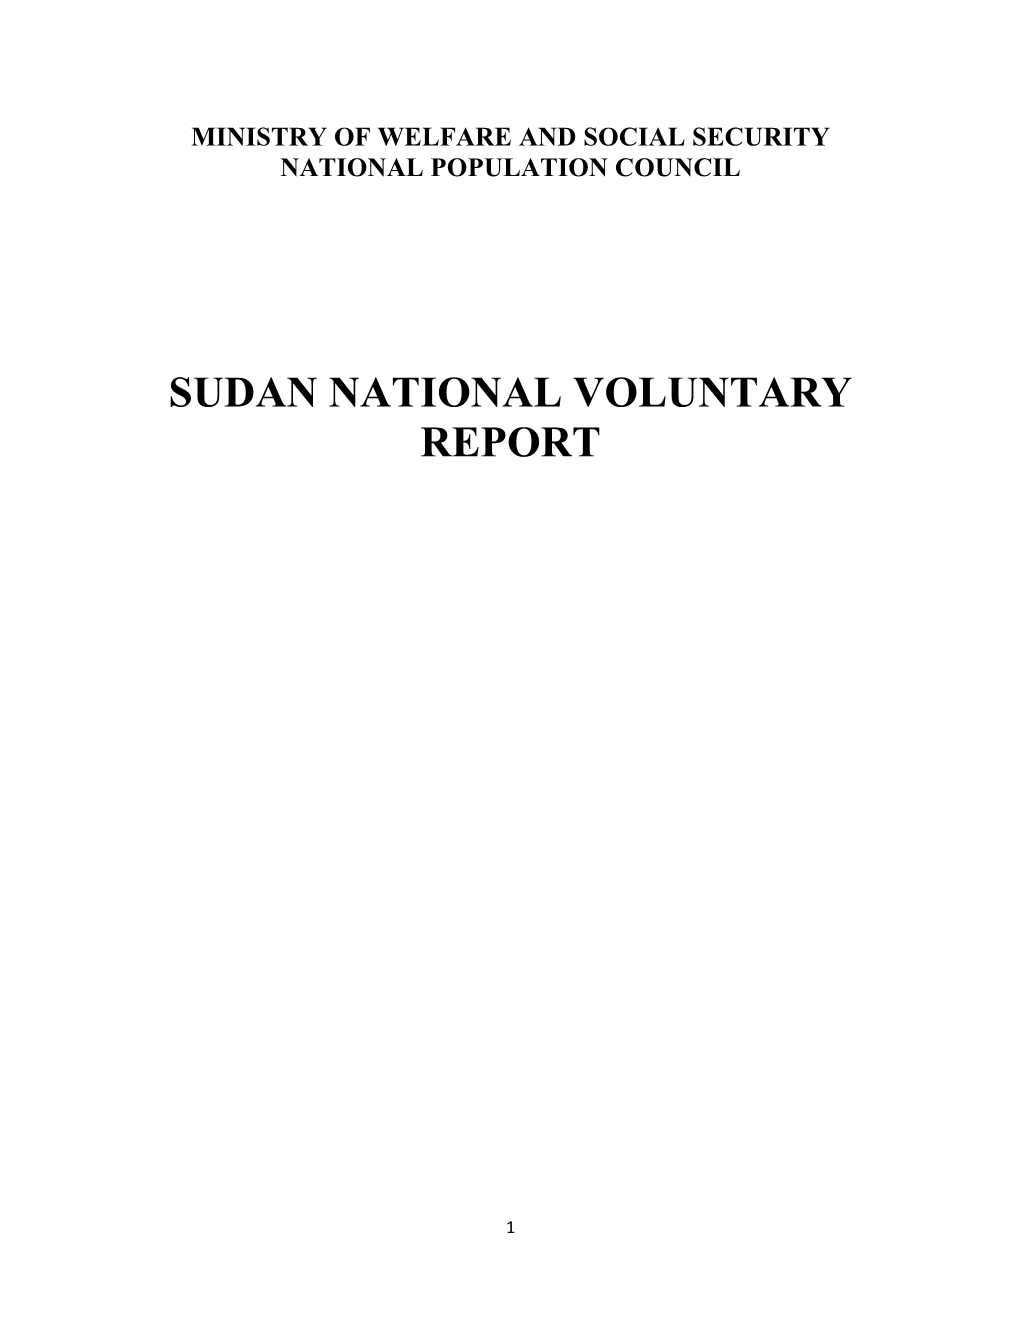 Sudan National Voluntary Report